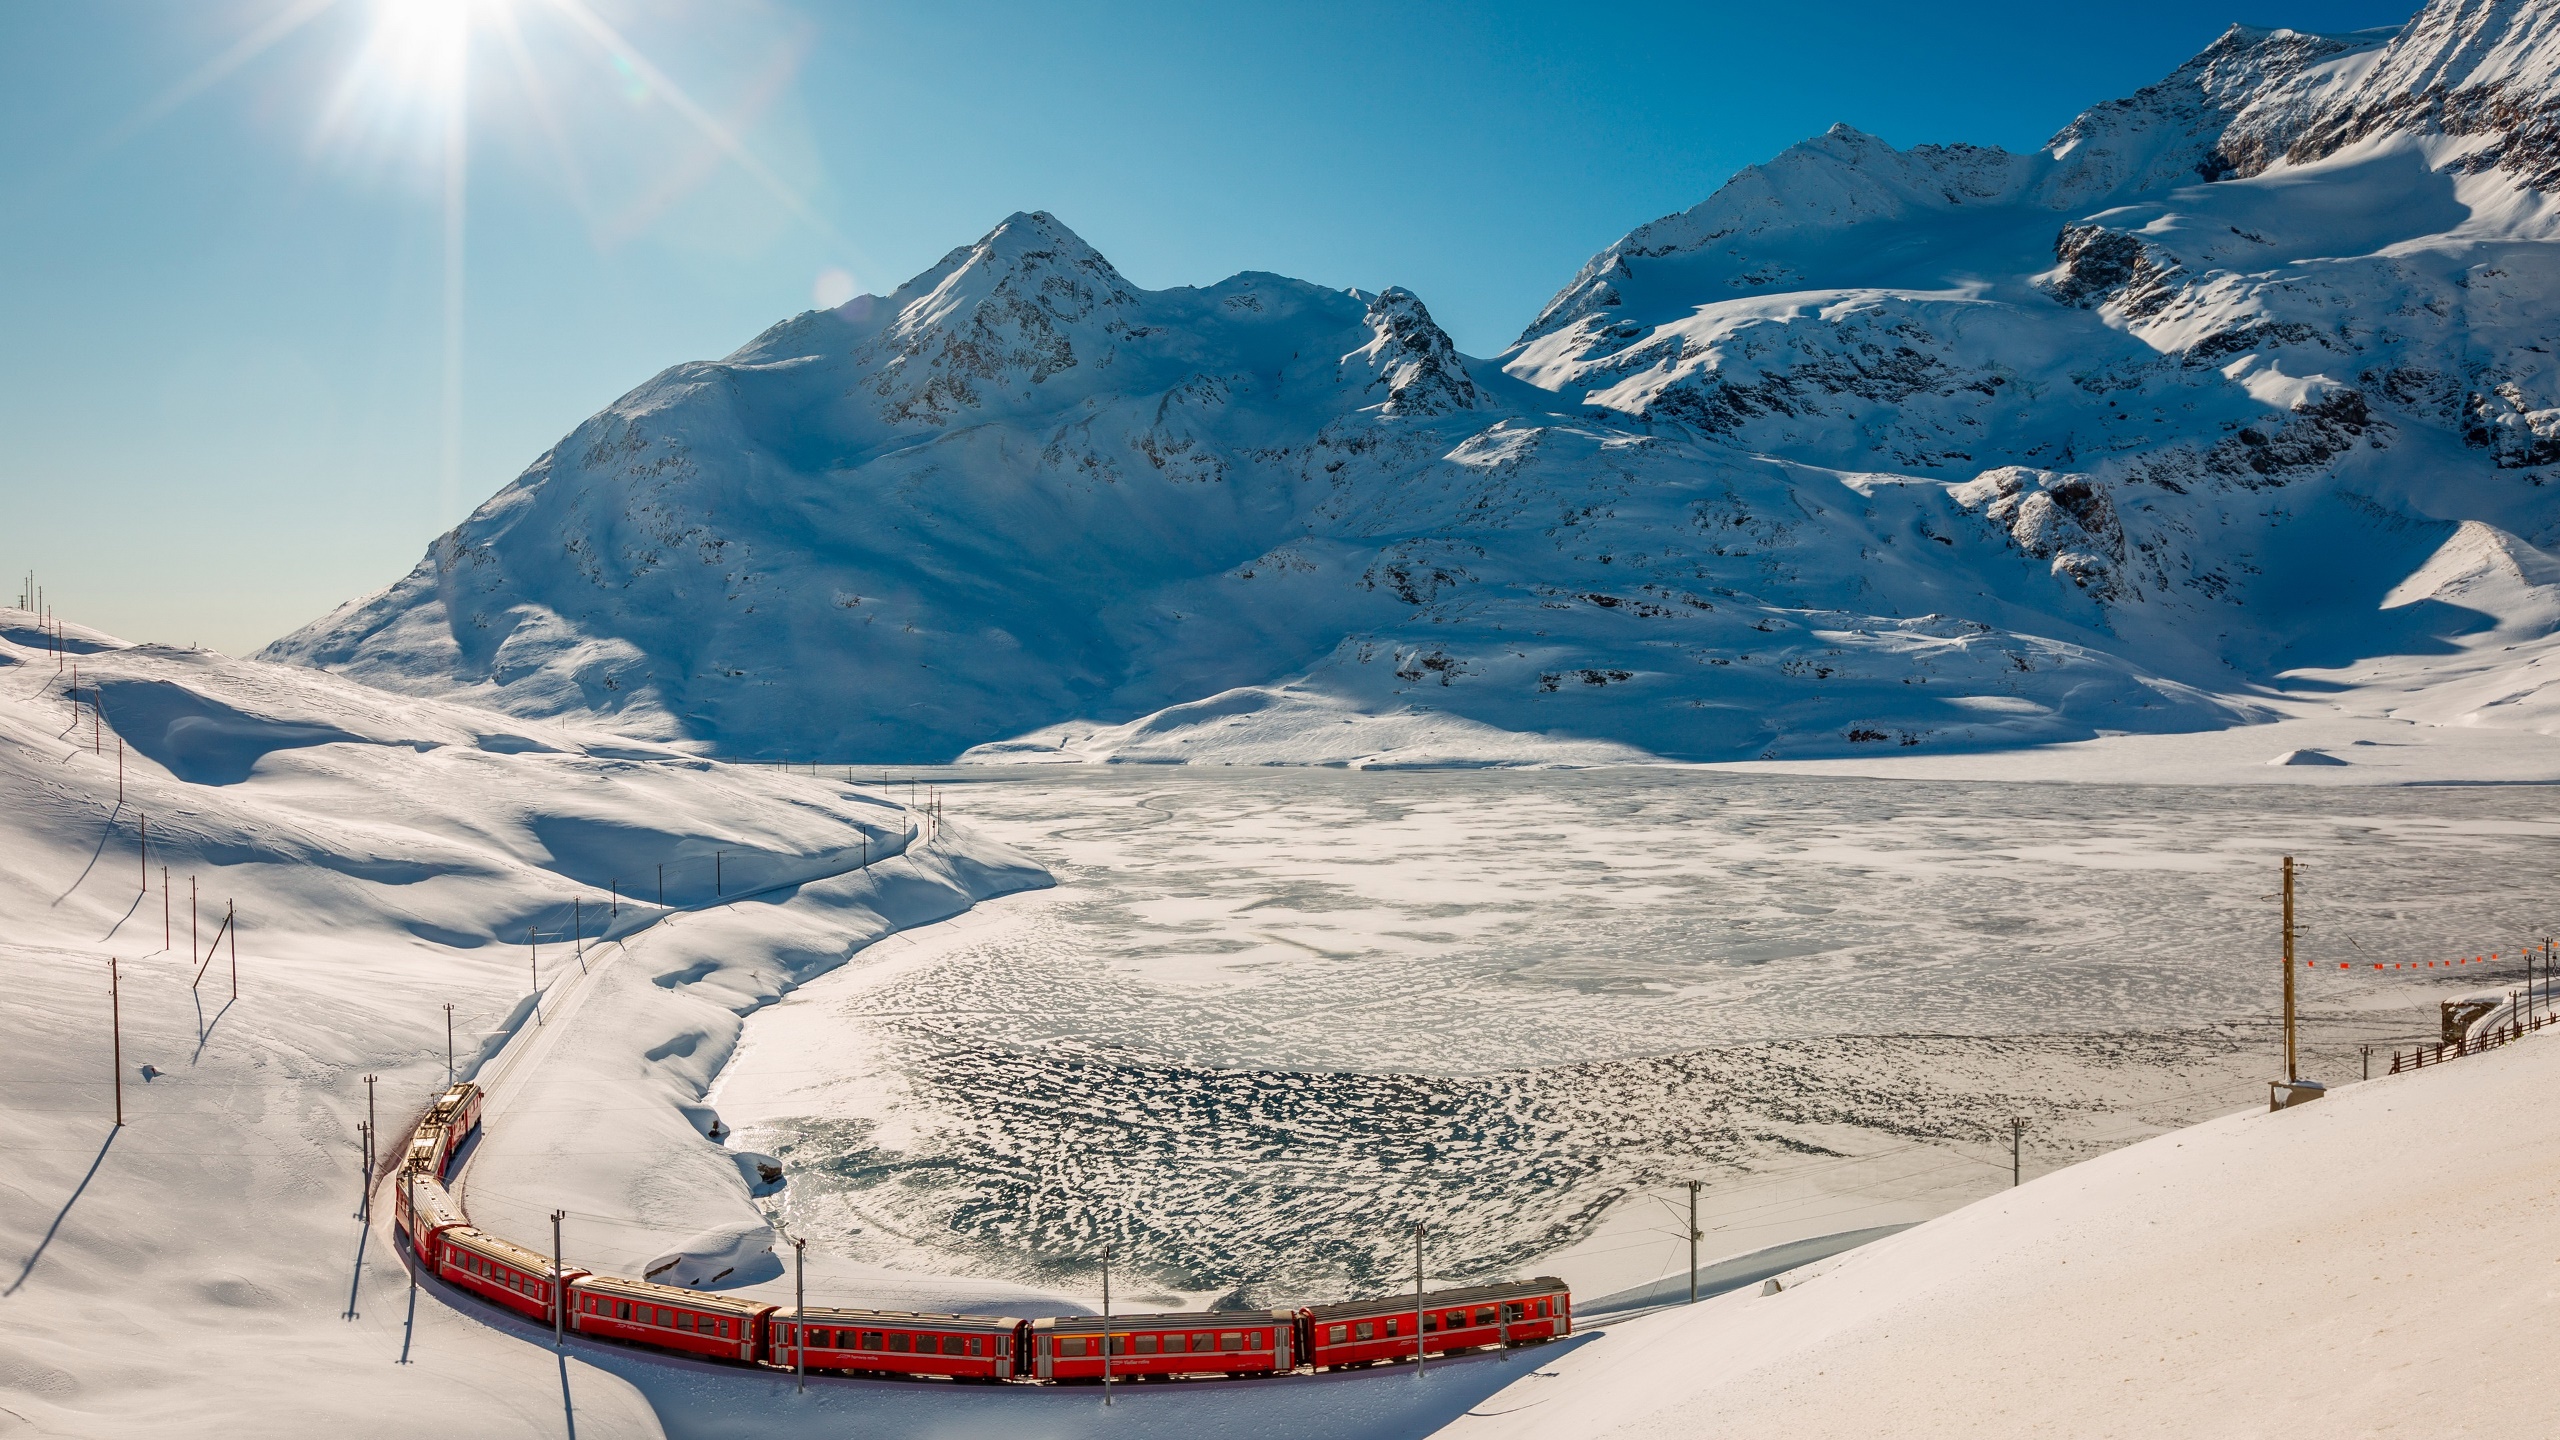 General 2560x1440 Switzerland train vehicle mountains winter snow railway lake